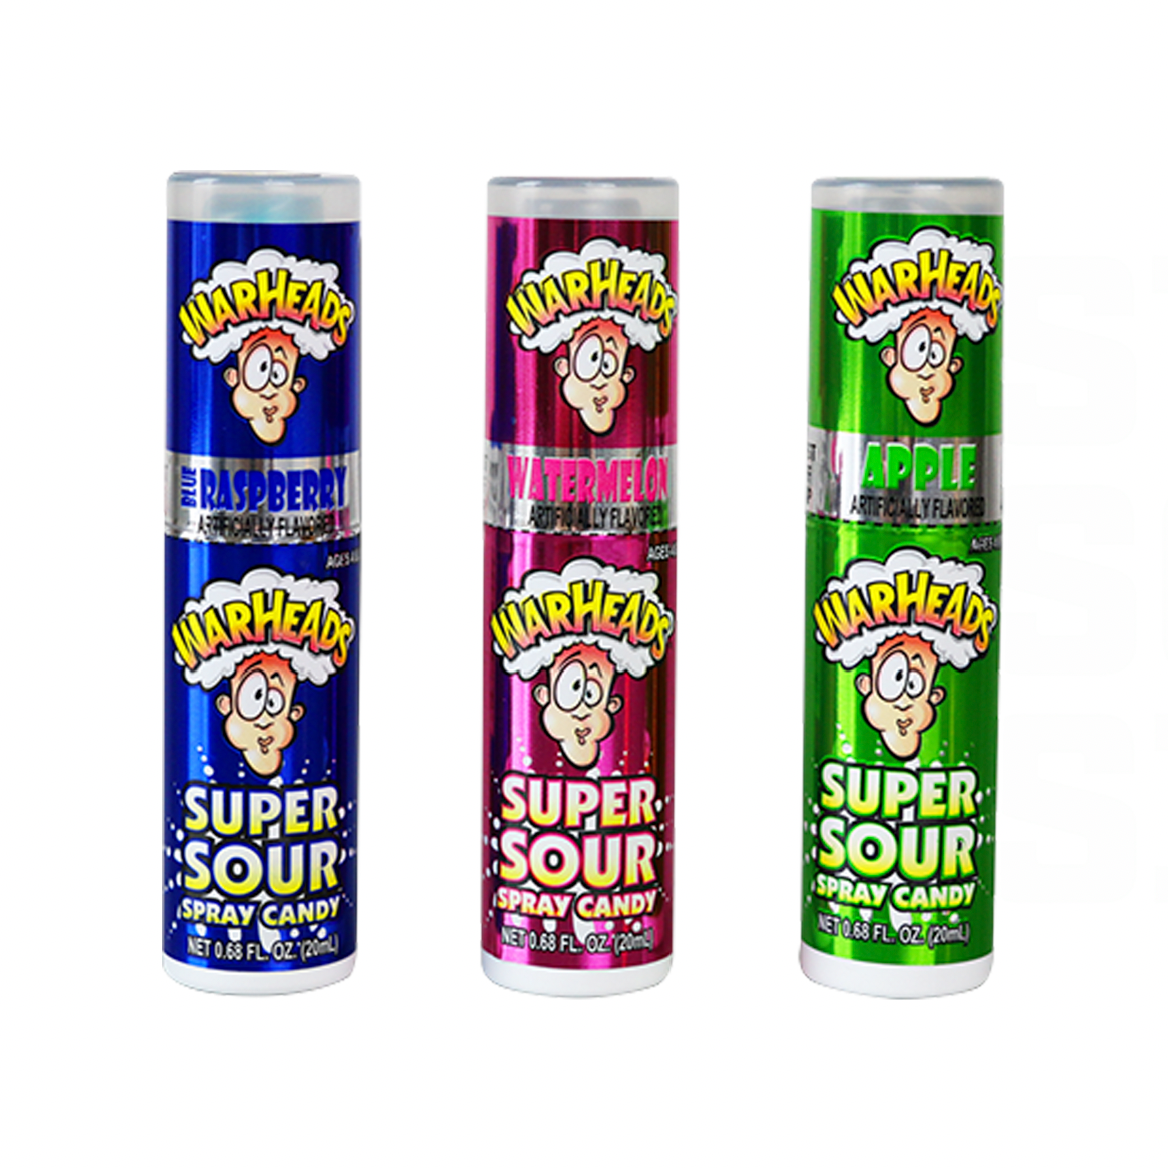 Warheads Super Sour Spray Candy 19g